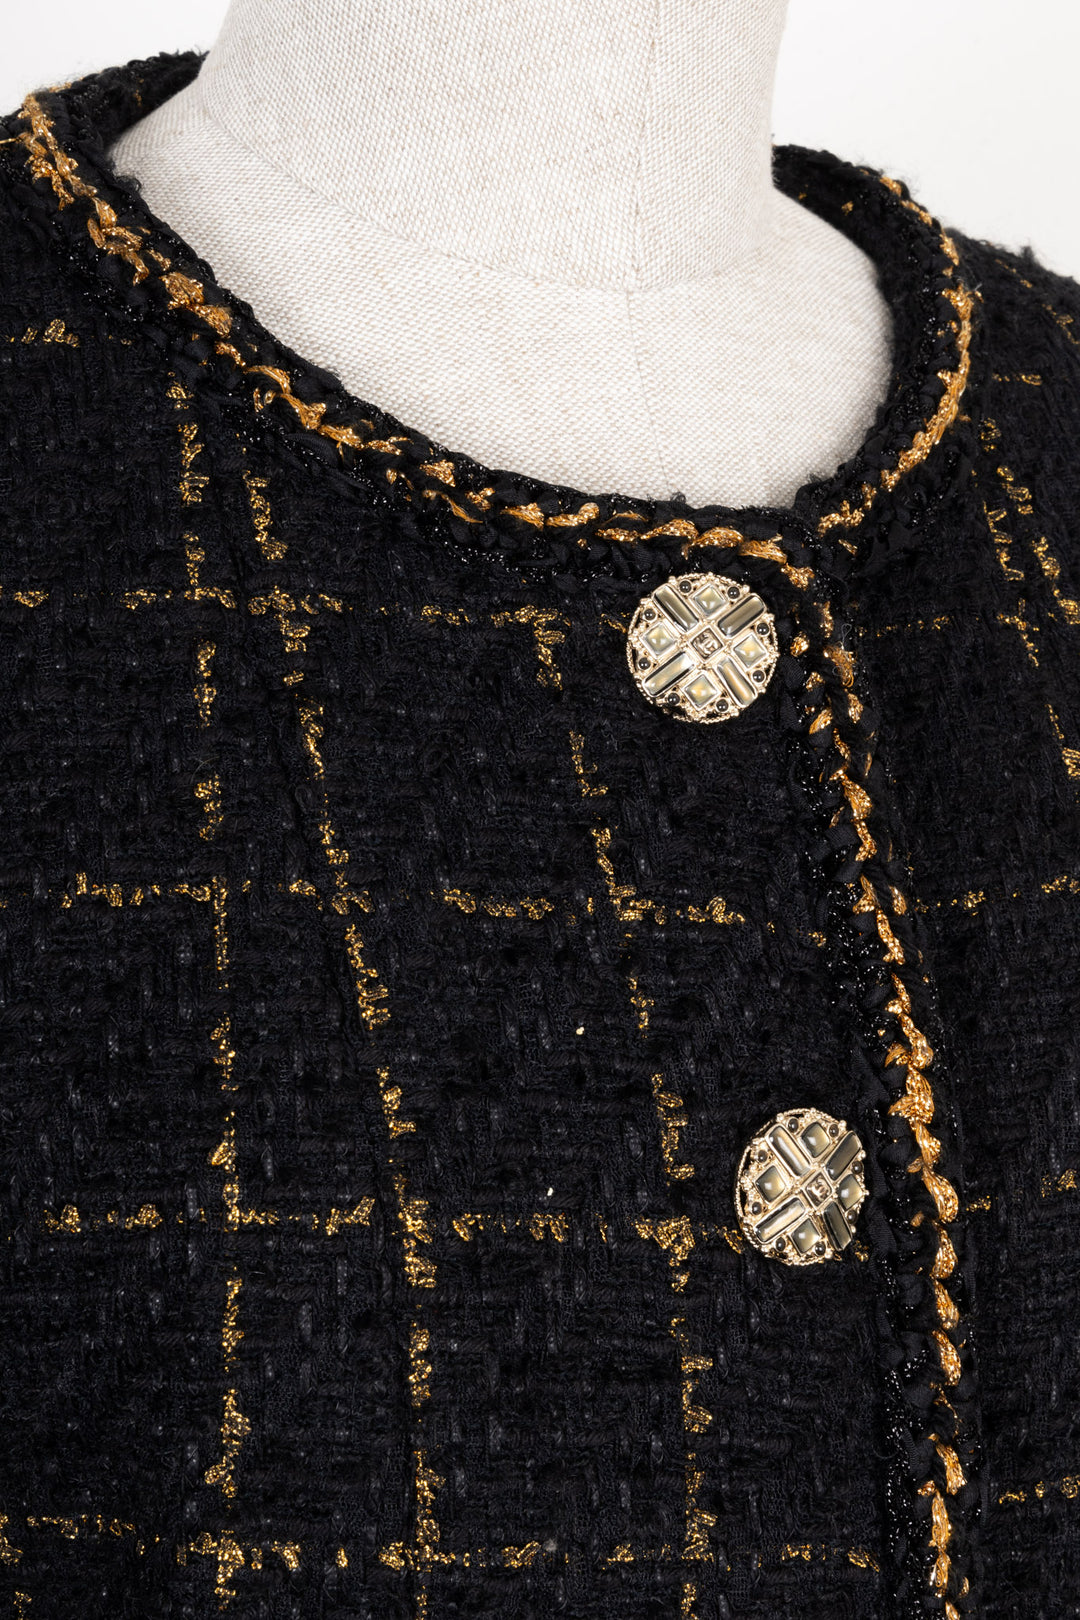 CHANEL Classic Tweed Jacket Black Gold